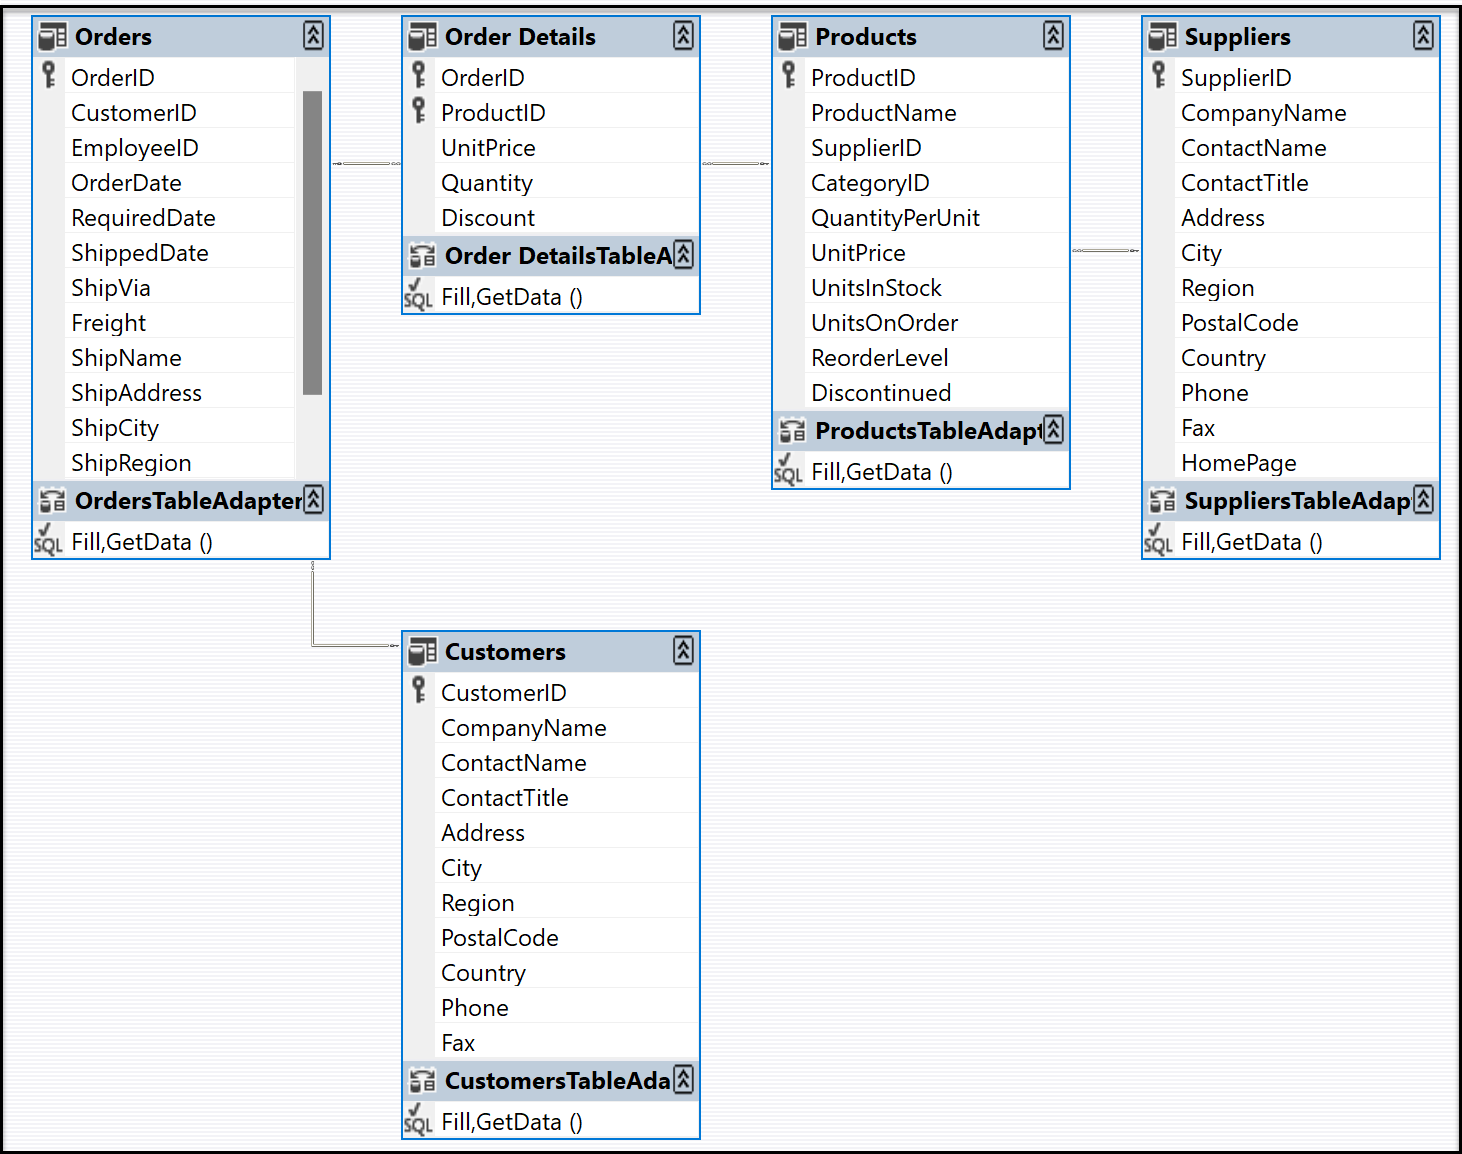 Create and configure datasets - Visual Studio (Windows) | Microsoft Learn